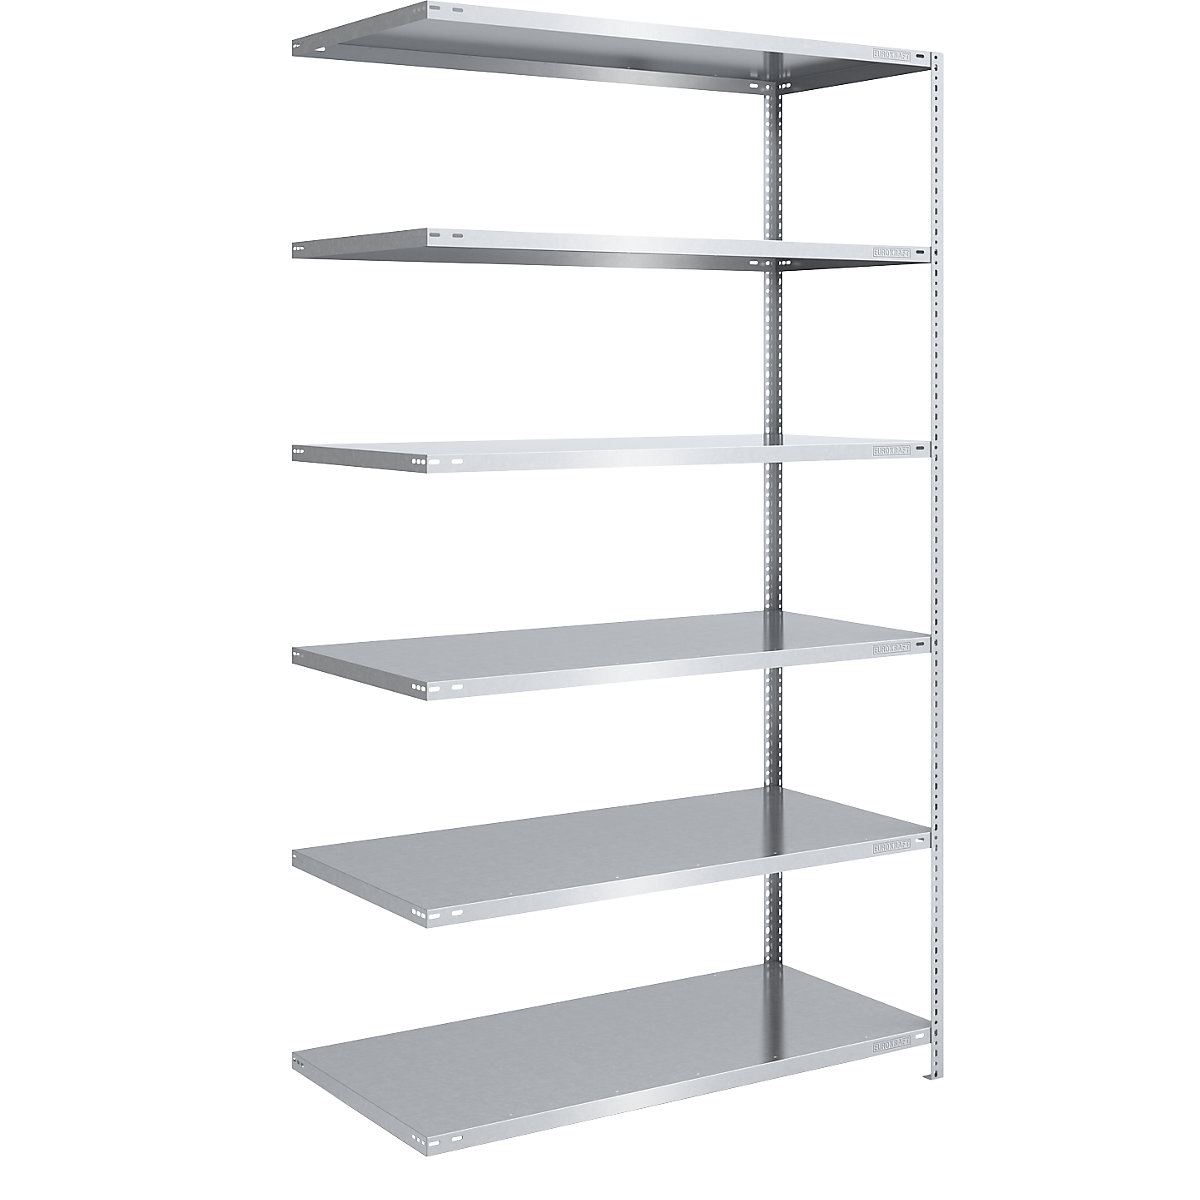 Bolt-together shelf unit, light duty, zinc plated – eurokraft pro, shelf unit height 2500 mm, shelf width 1300 mm, depth 800 mm, extension shelf unit-10